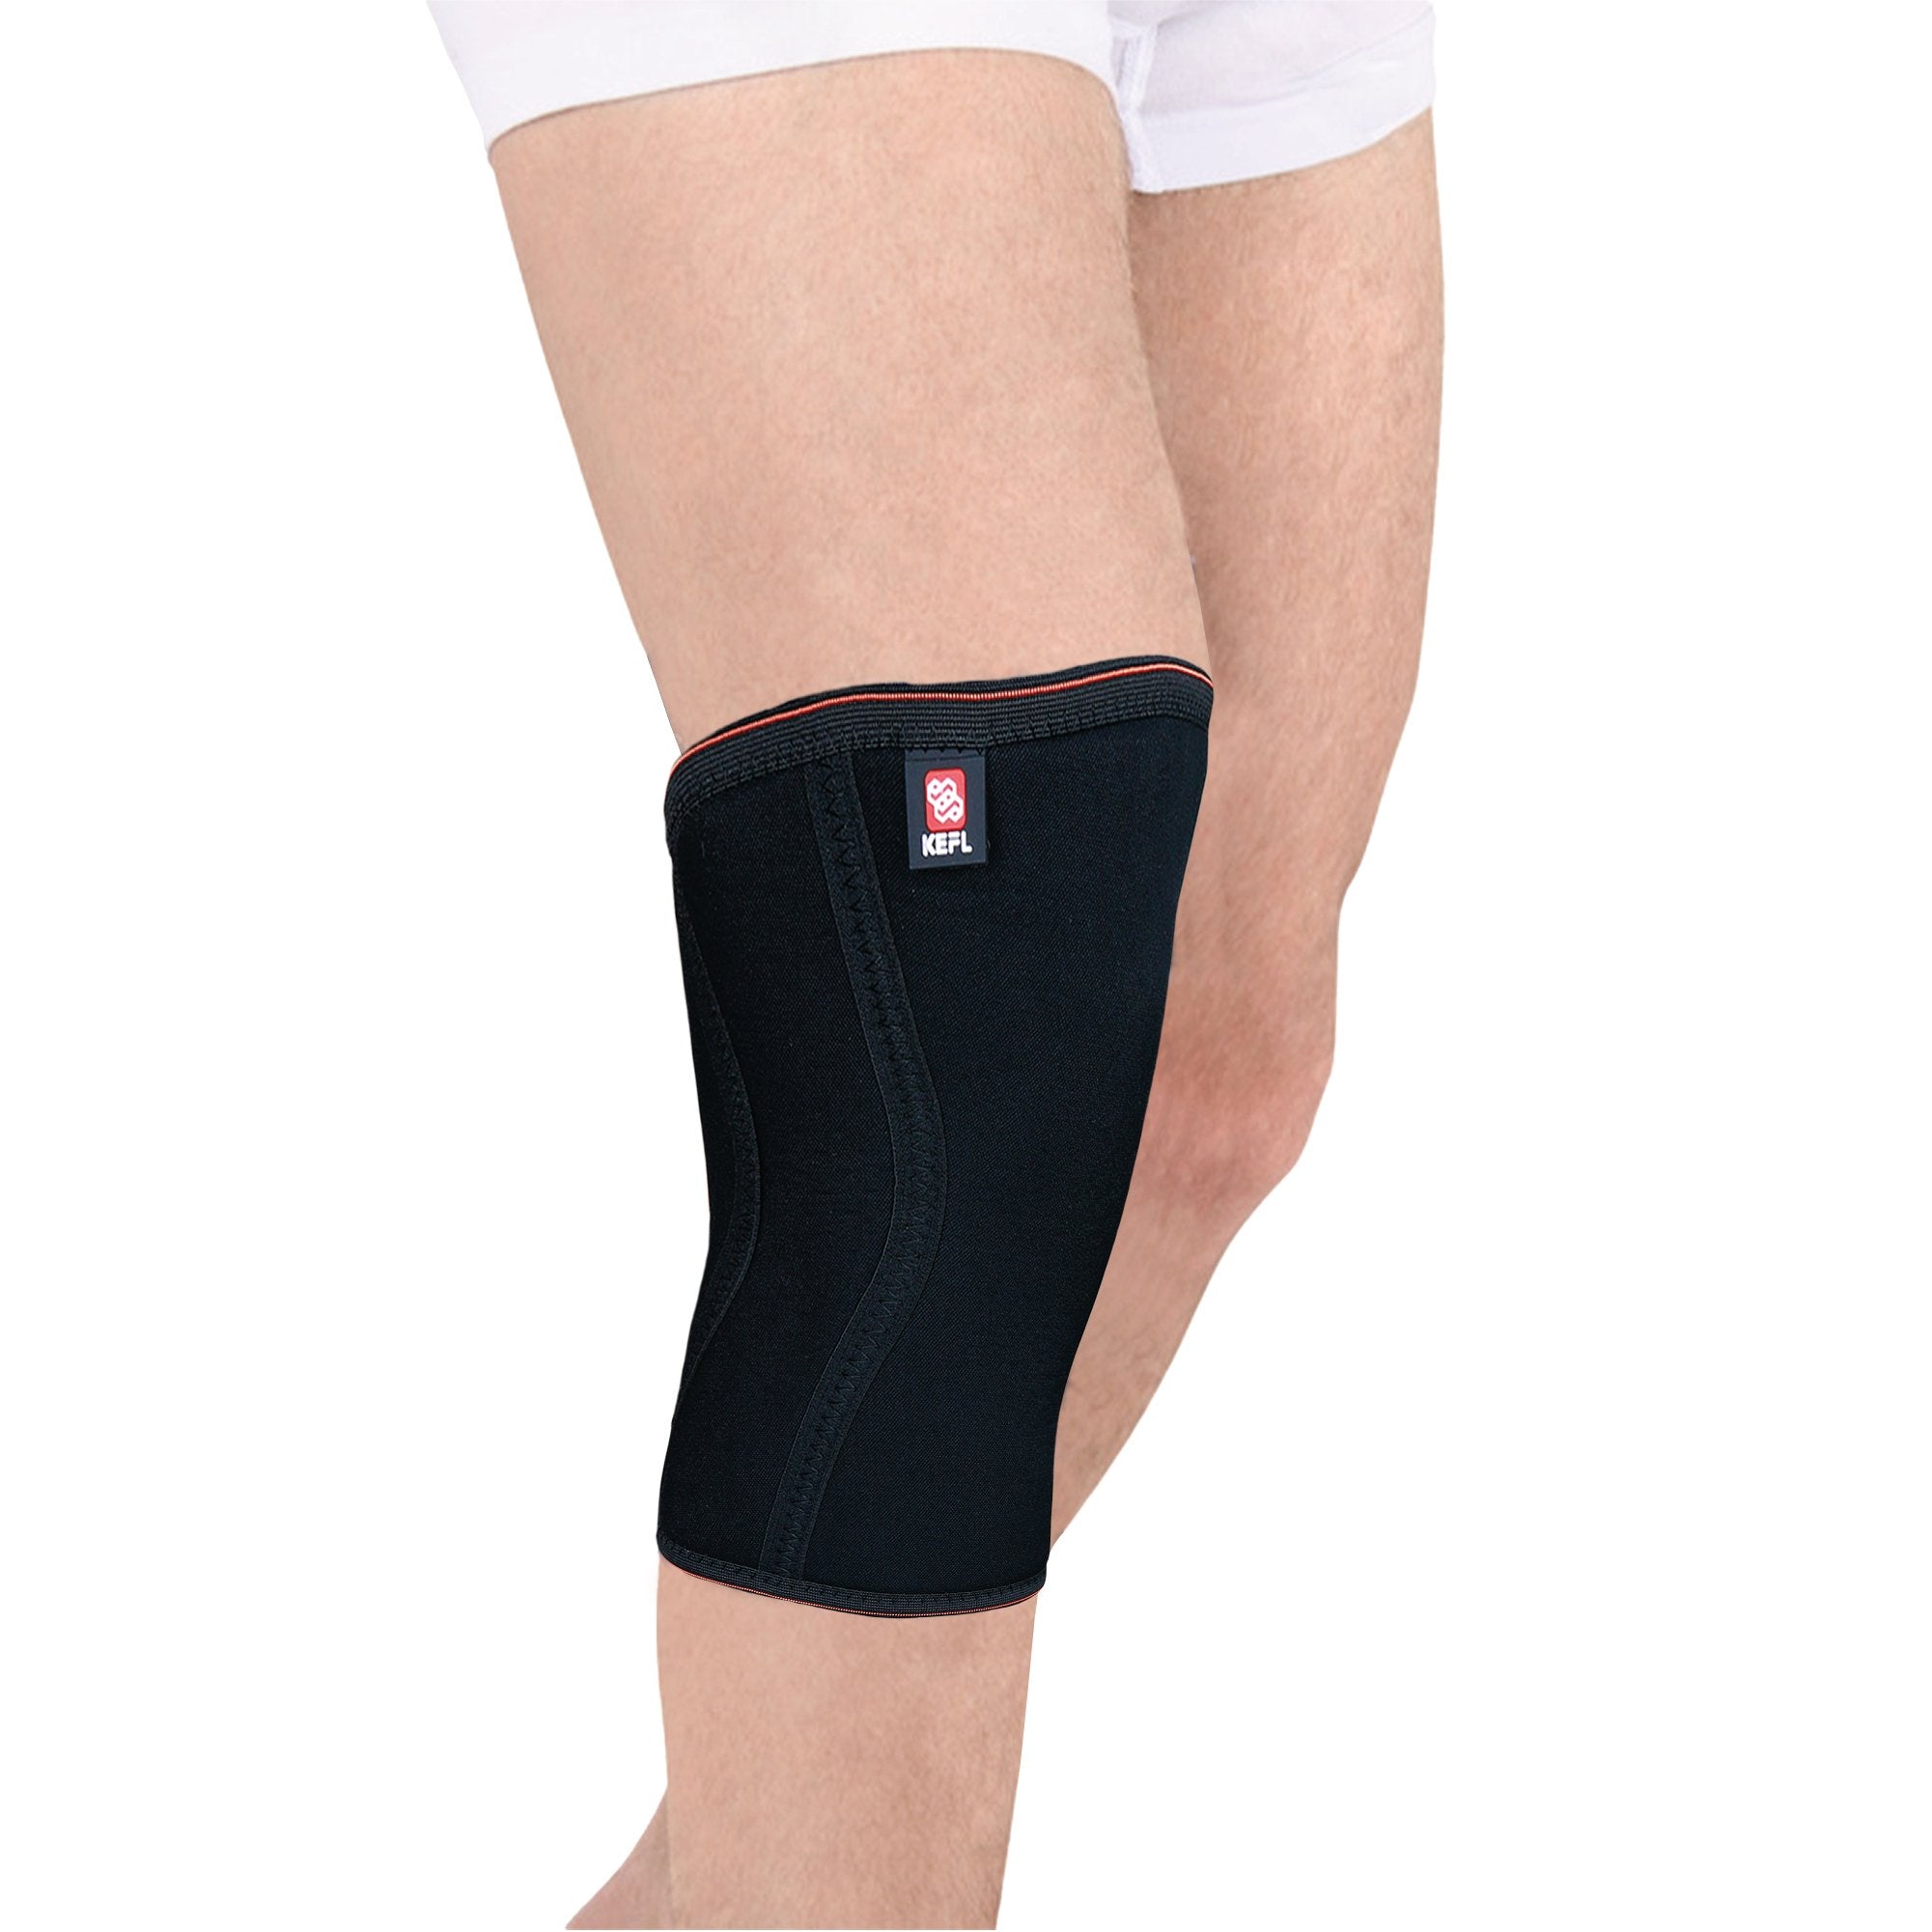 Premium Knee Brace Support - KEFLUK